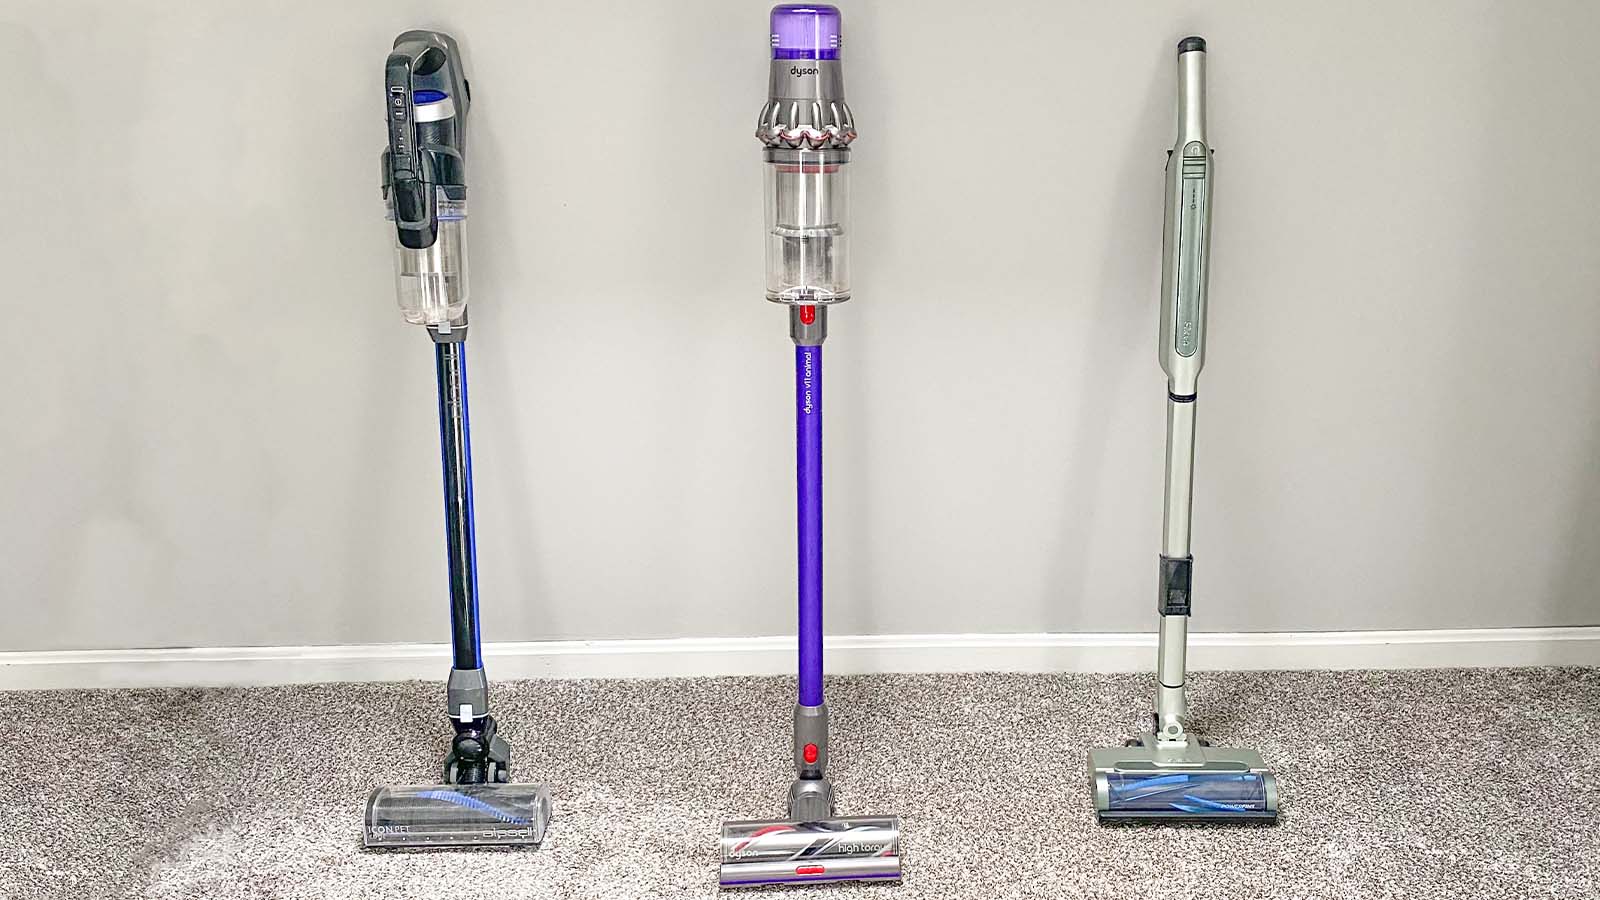 Cordless Stick Vacuums